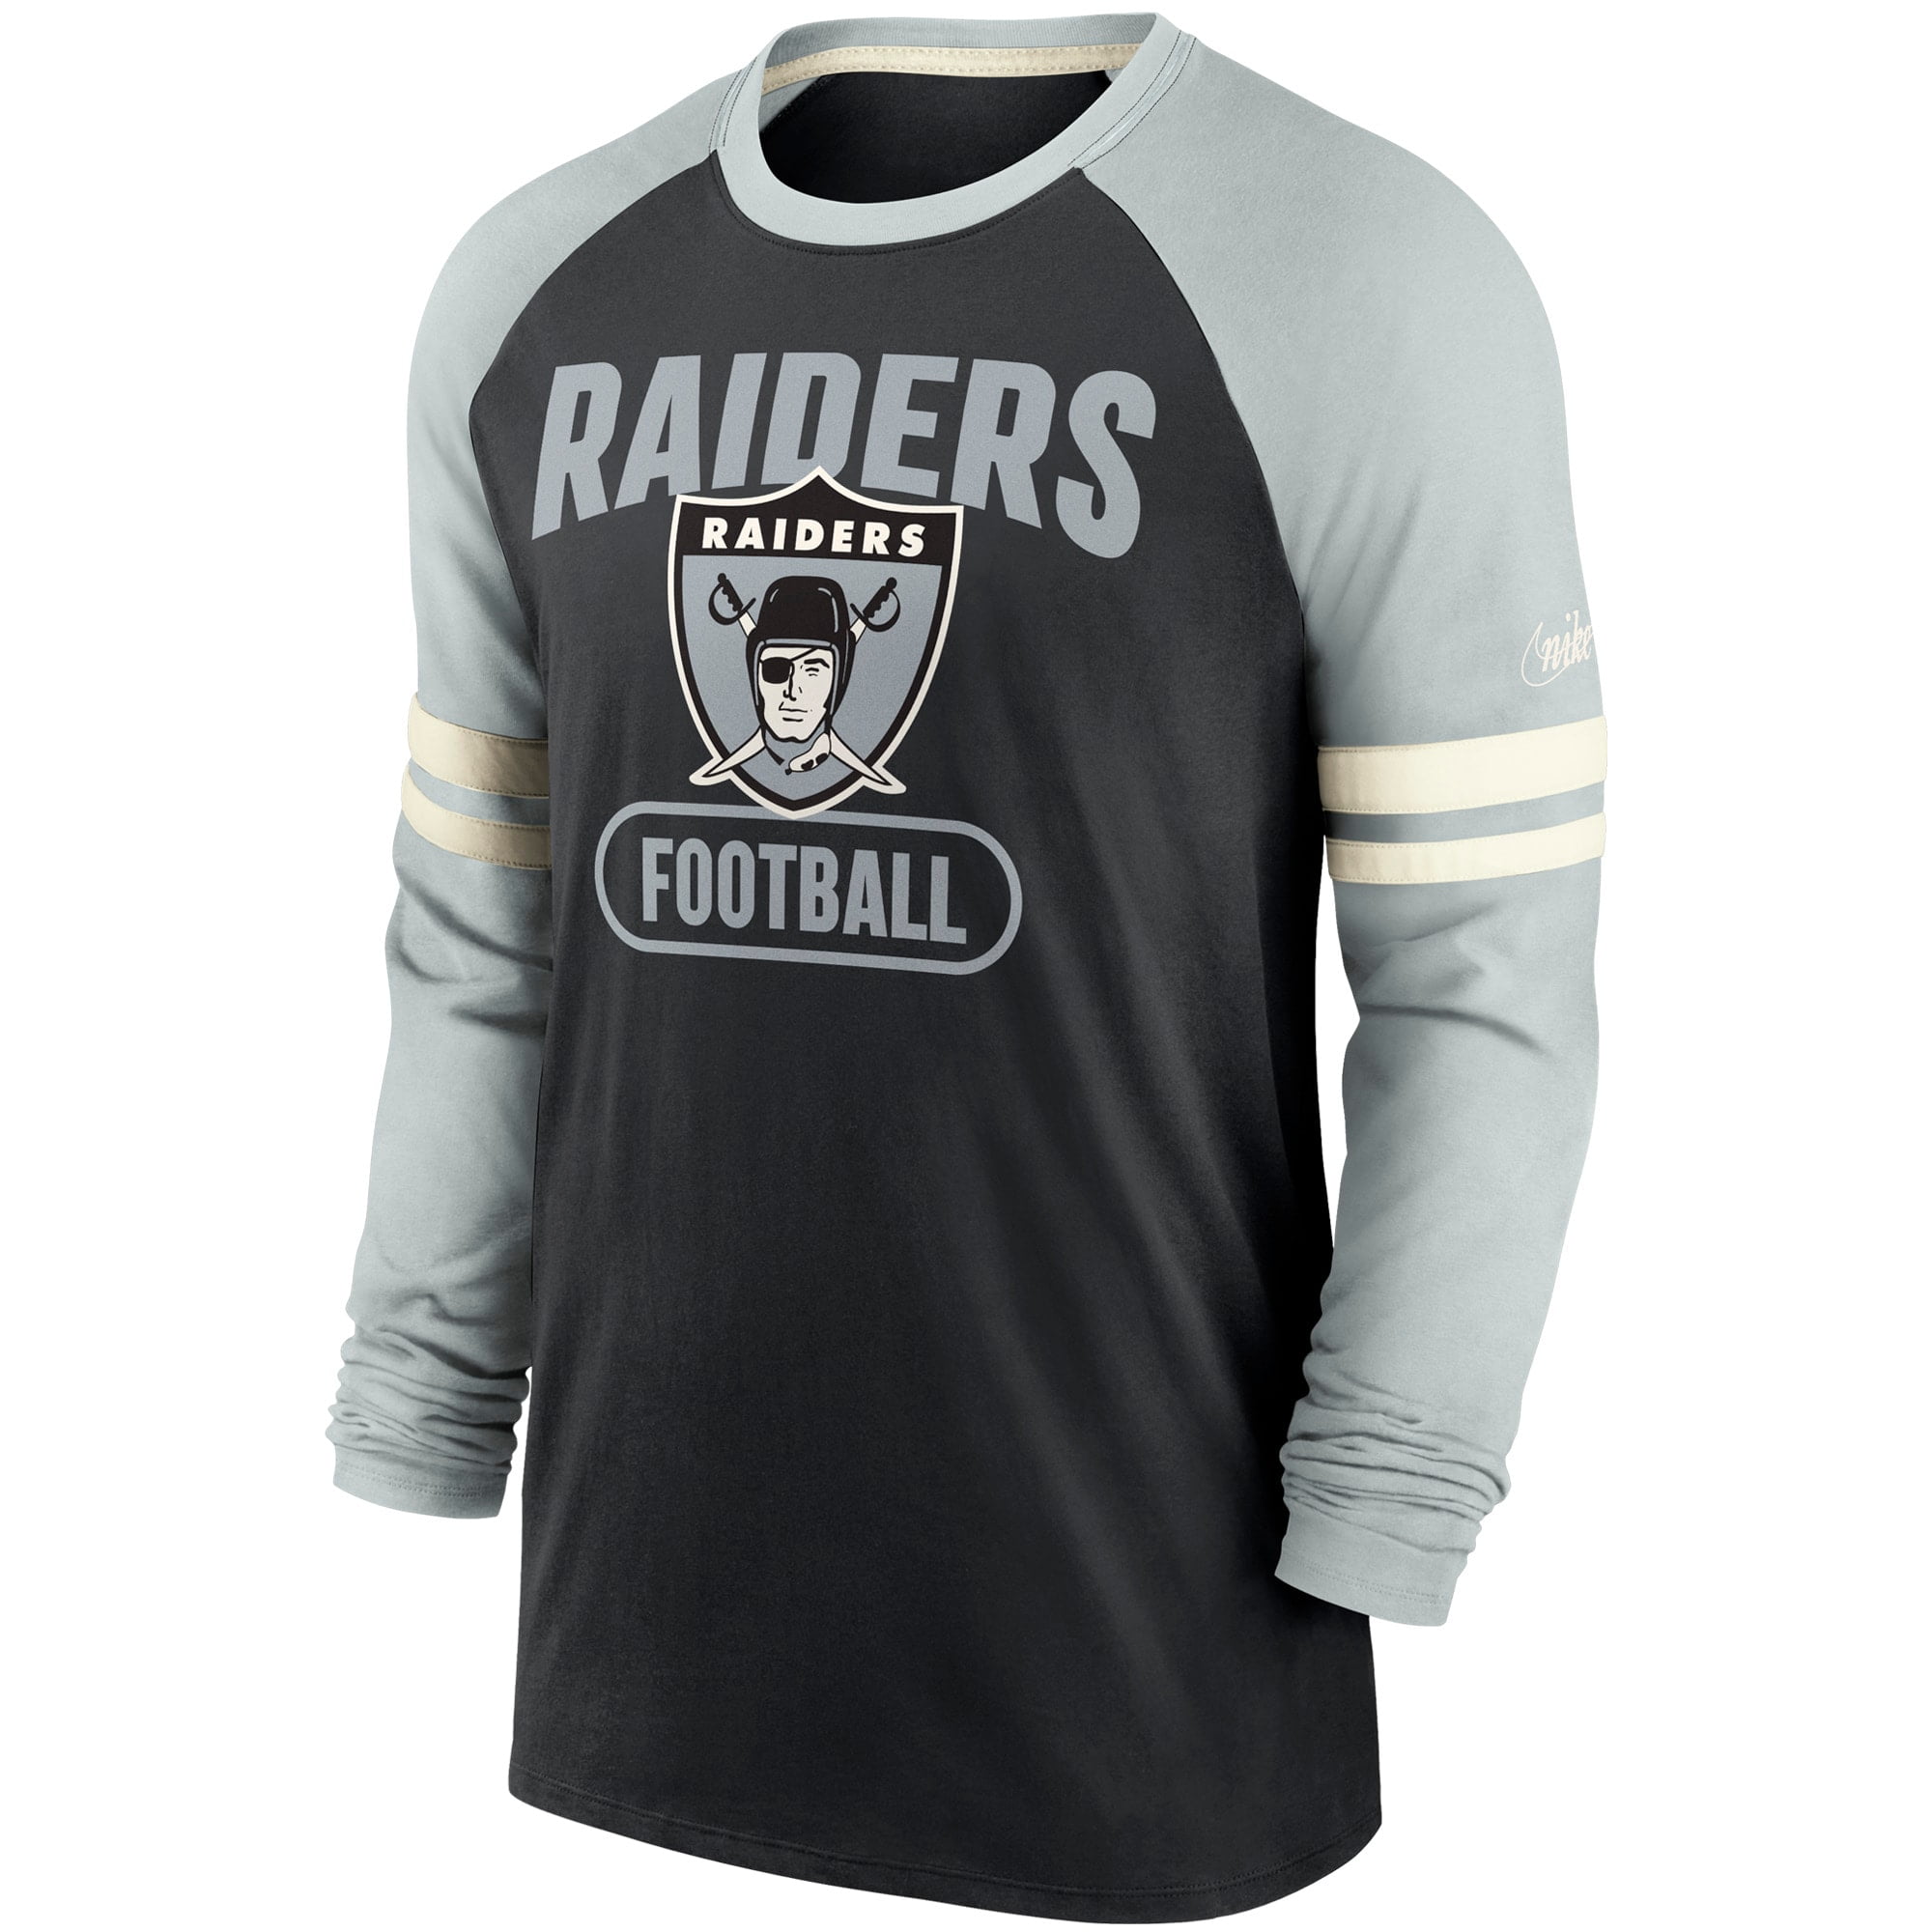 Nike Men's Las Vegas Raiders Athletic Long Sleeve Raglan T-Shirt - Charcoal Heather & Black - L (Large)